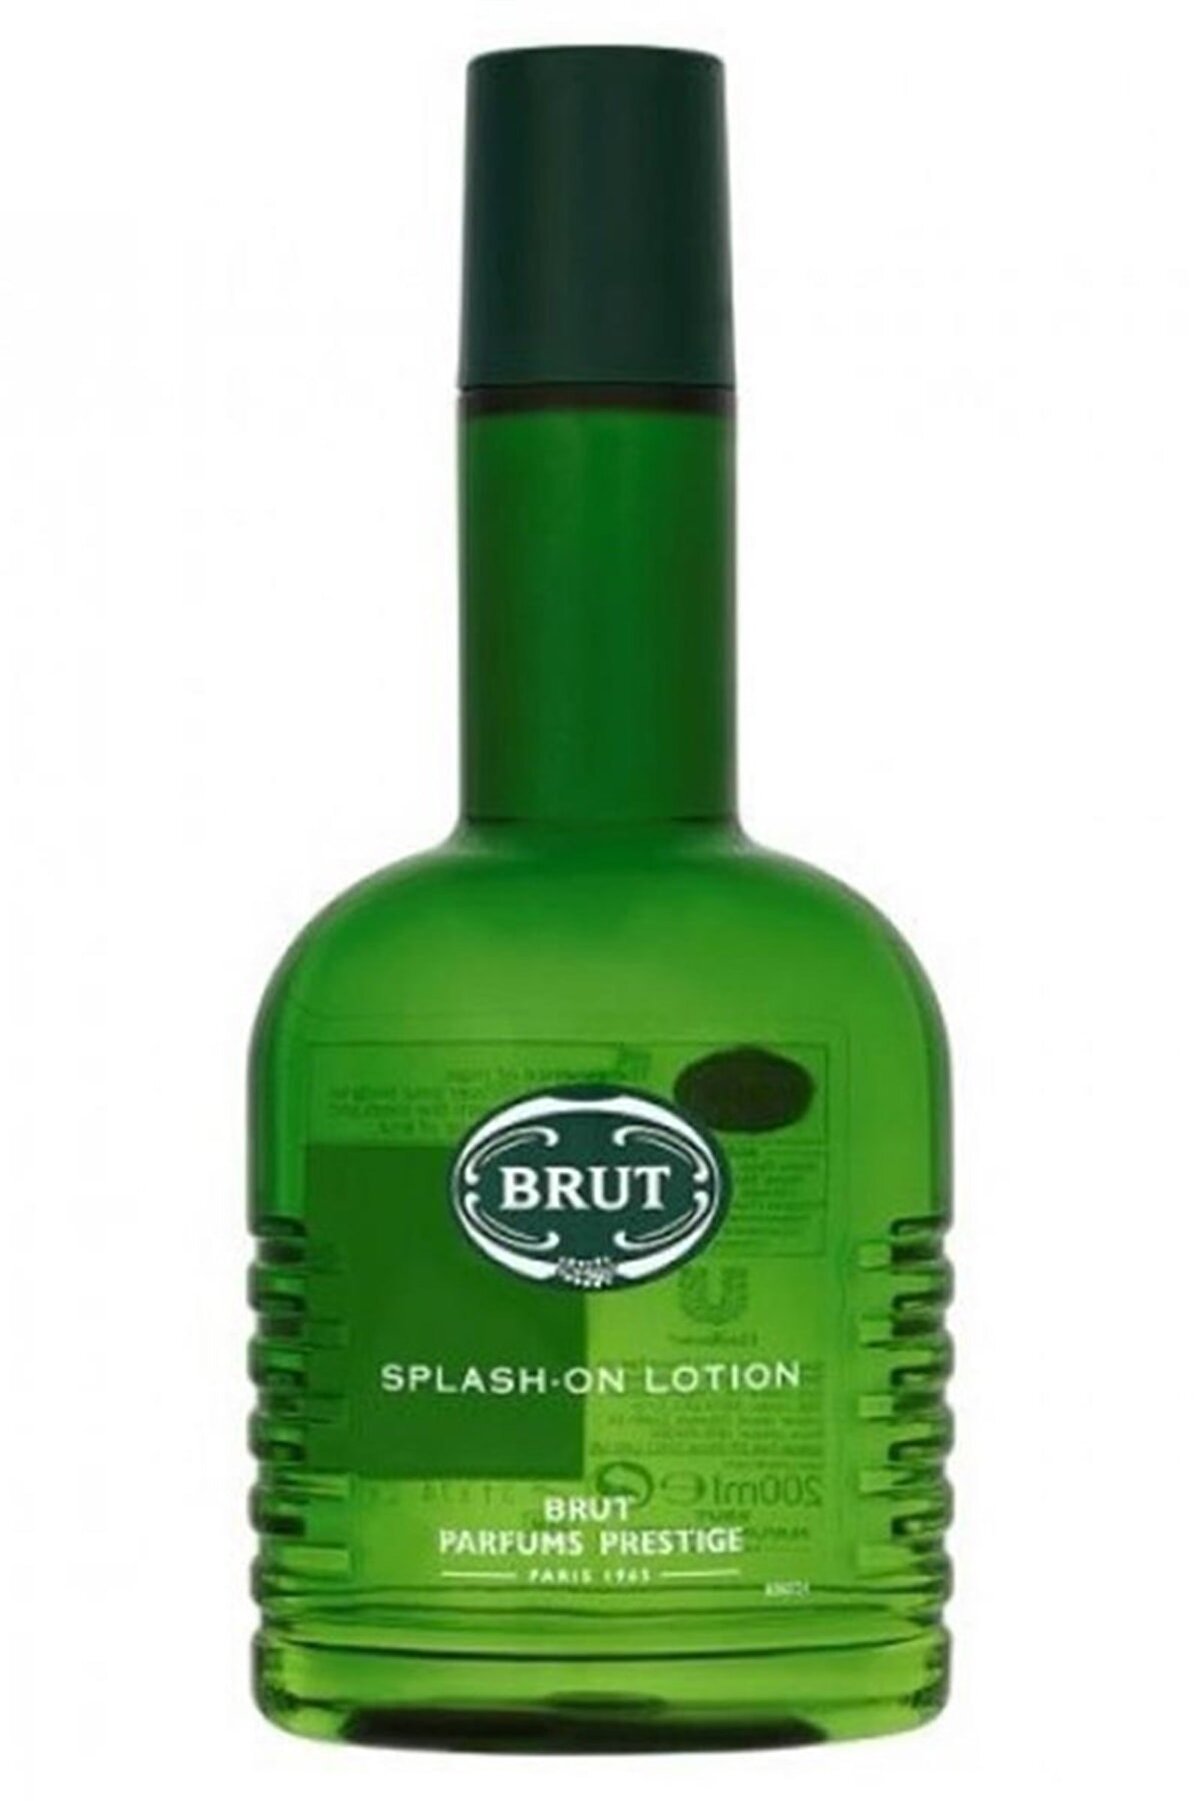 Brut Original Splash -on 200 ml